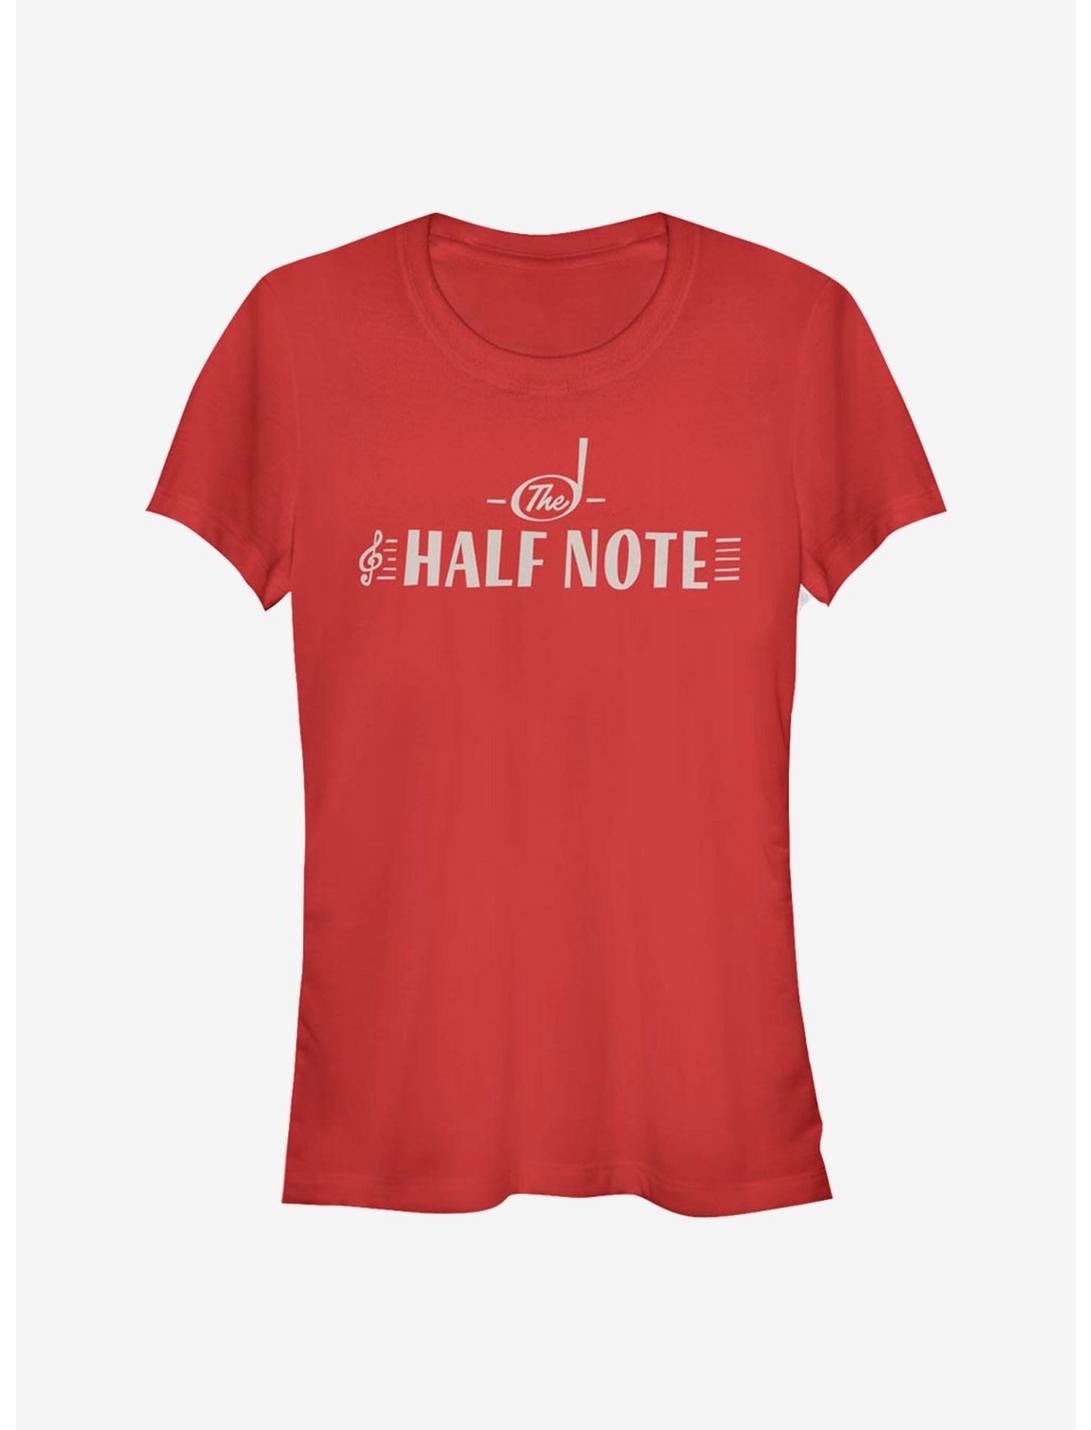 Disney Pixar Soul The Half Note Girls T-Shirt, RED, hi-res